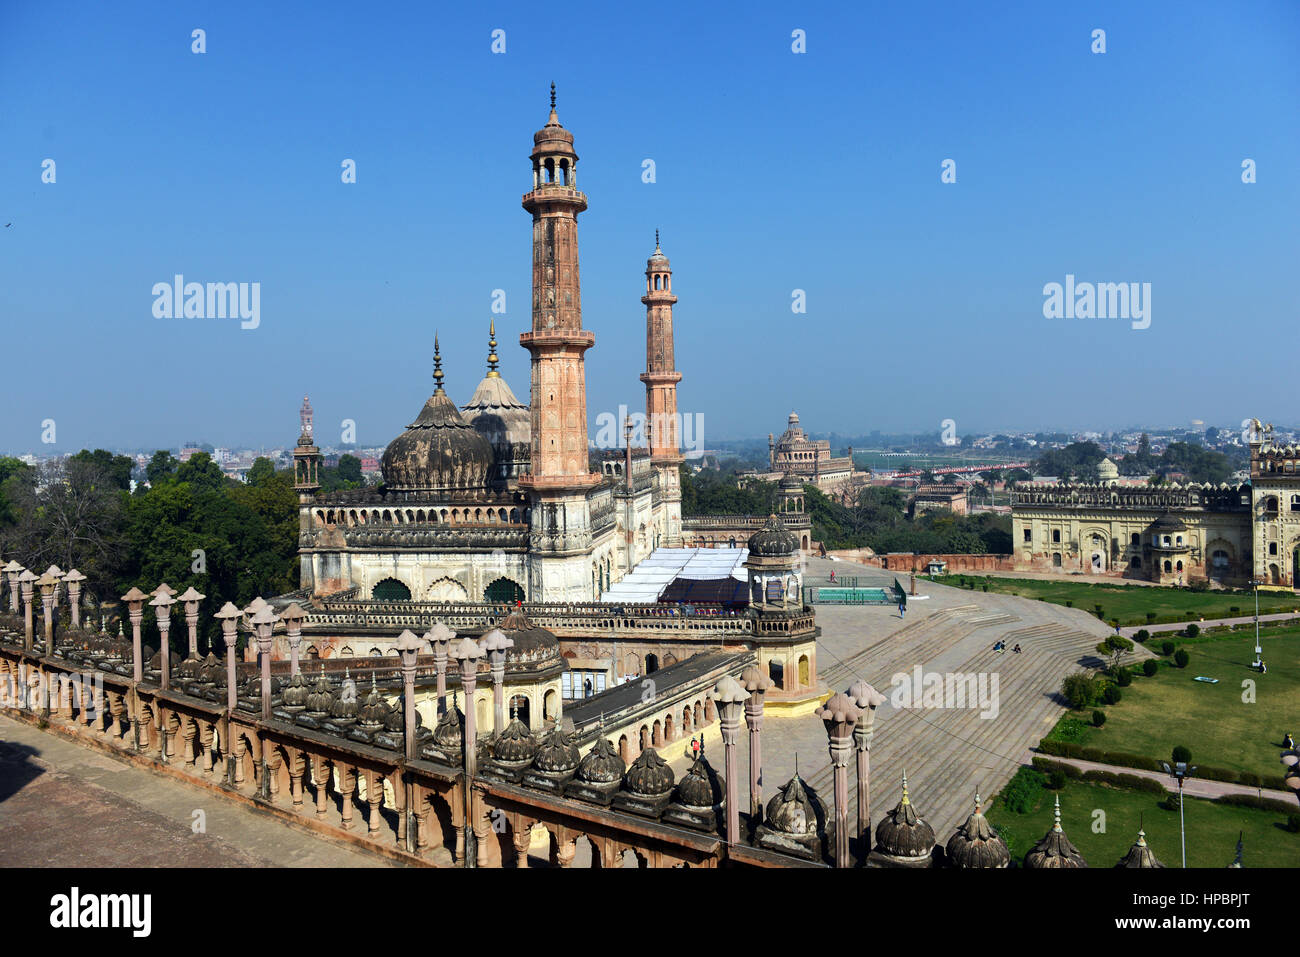 L'intérieur de la mosquée Asfi Bara Imambara complexe dans Lucknow, Uttar Pradesh. Banque D'Images